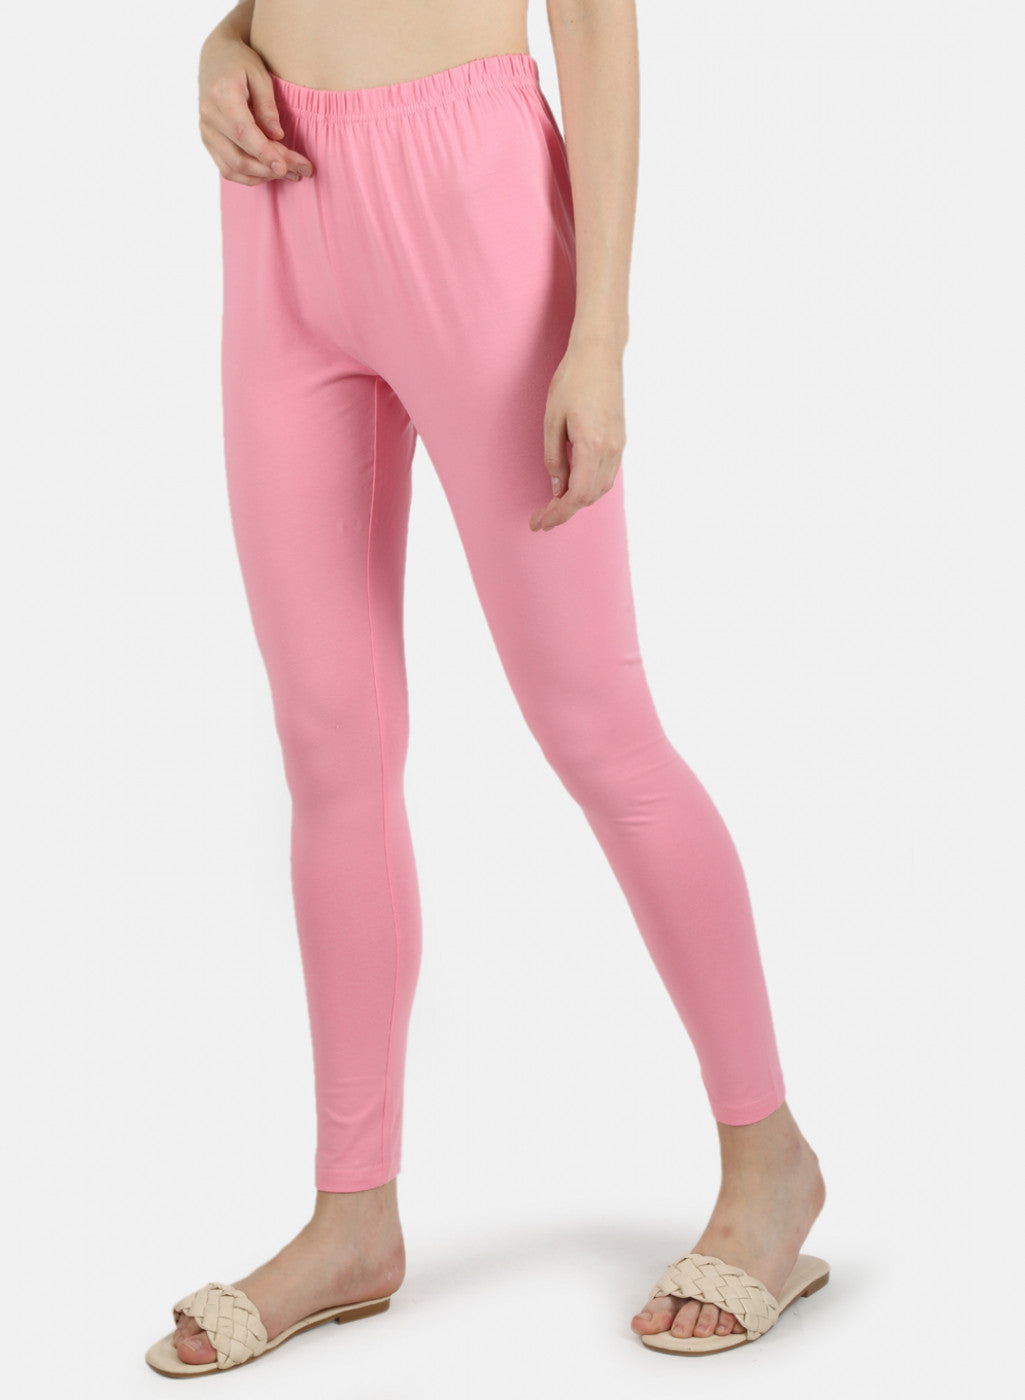 Pink Solid Color Casual Leggings, Premium Luxury Designer Women's Tights-Made  in USA/EU | Leggings casual, Colorful fashion, Fashion tights